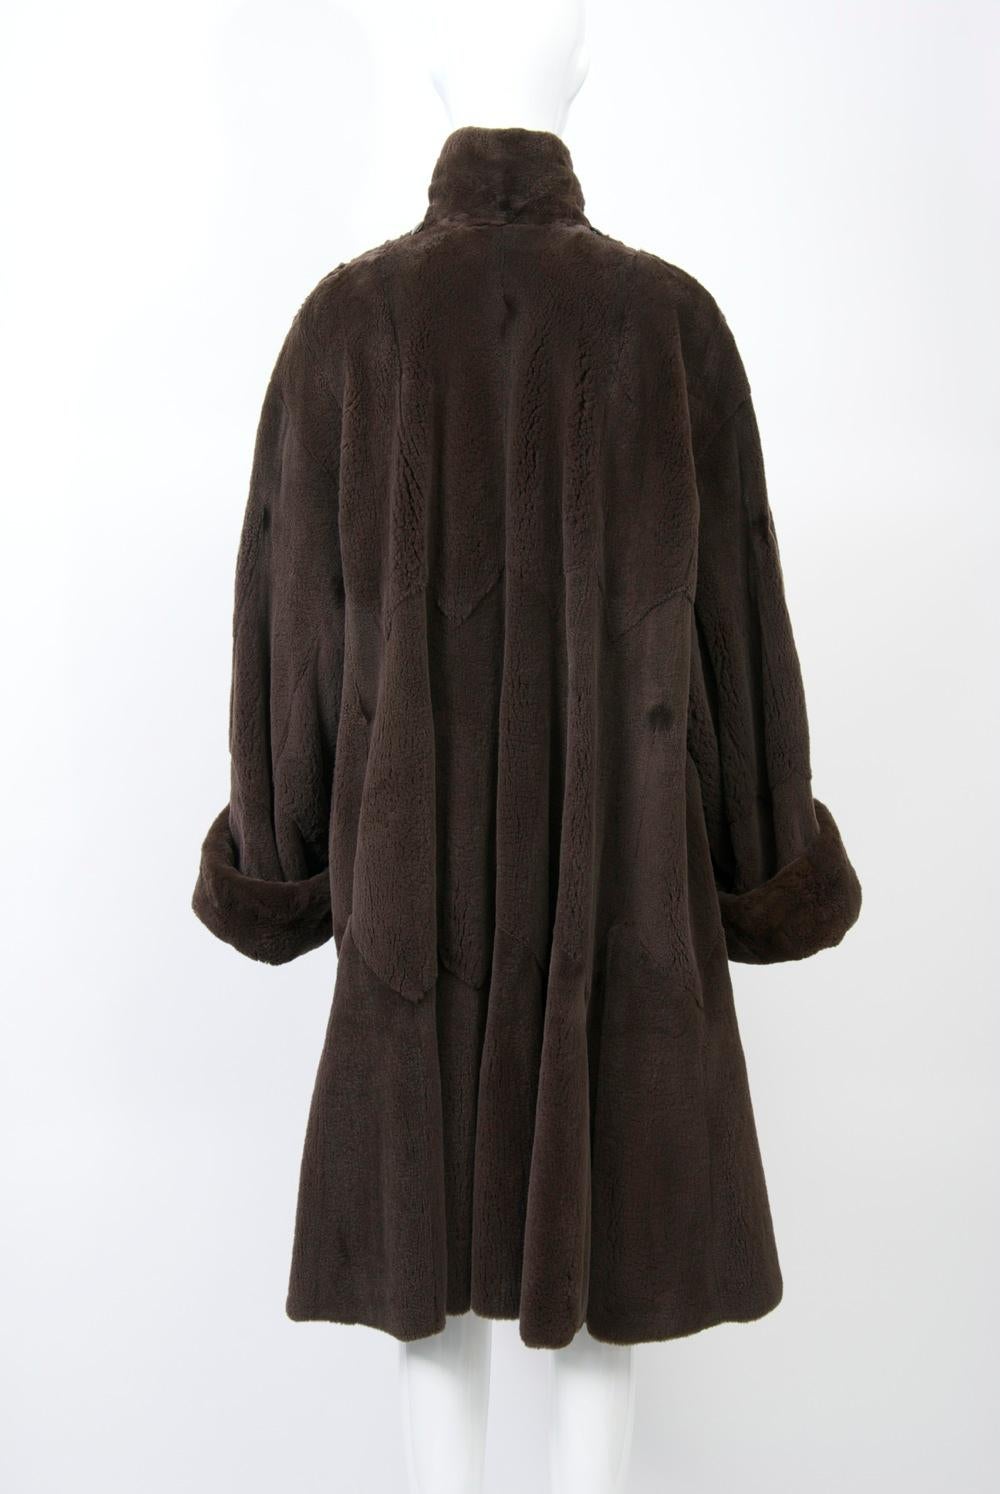 Giuliana Teso Sheared Mink Reversible Coat 7